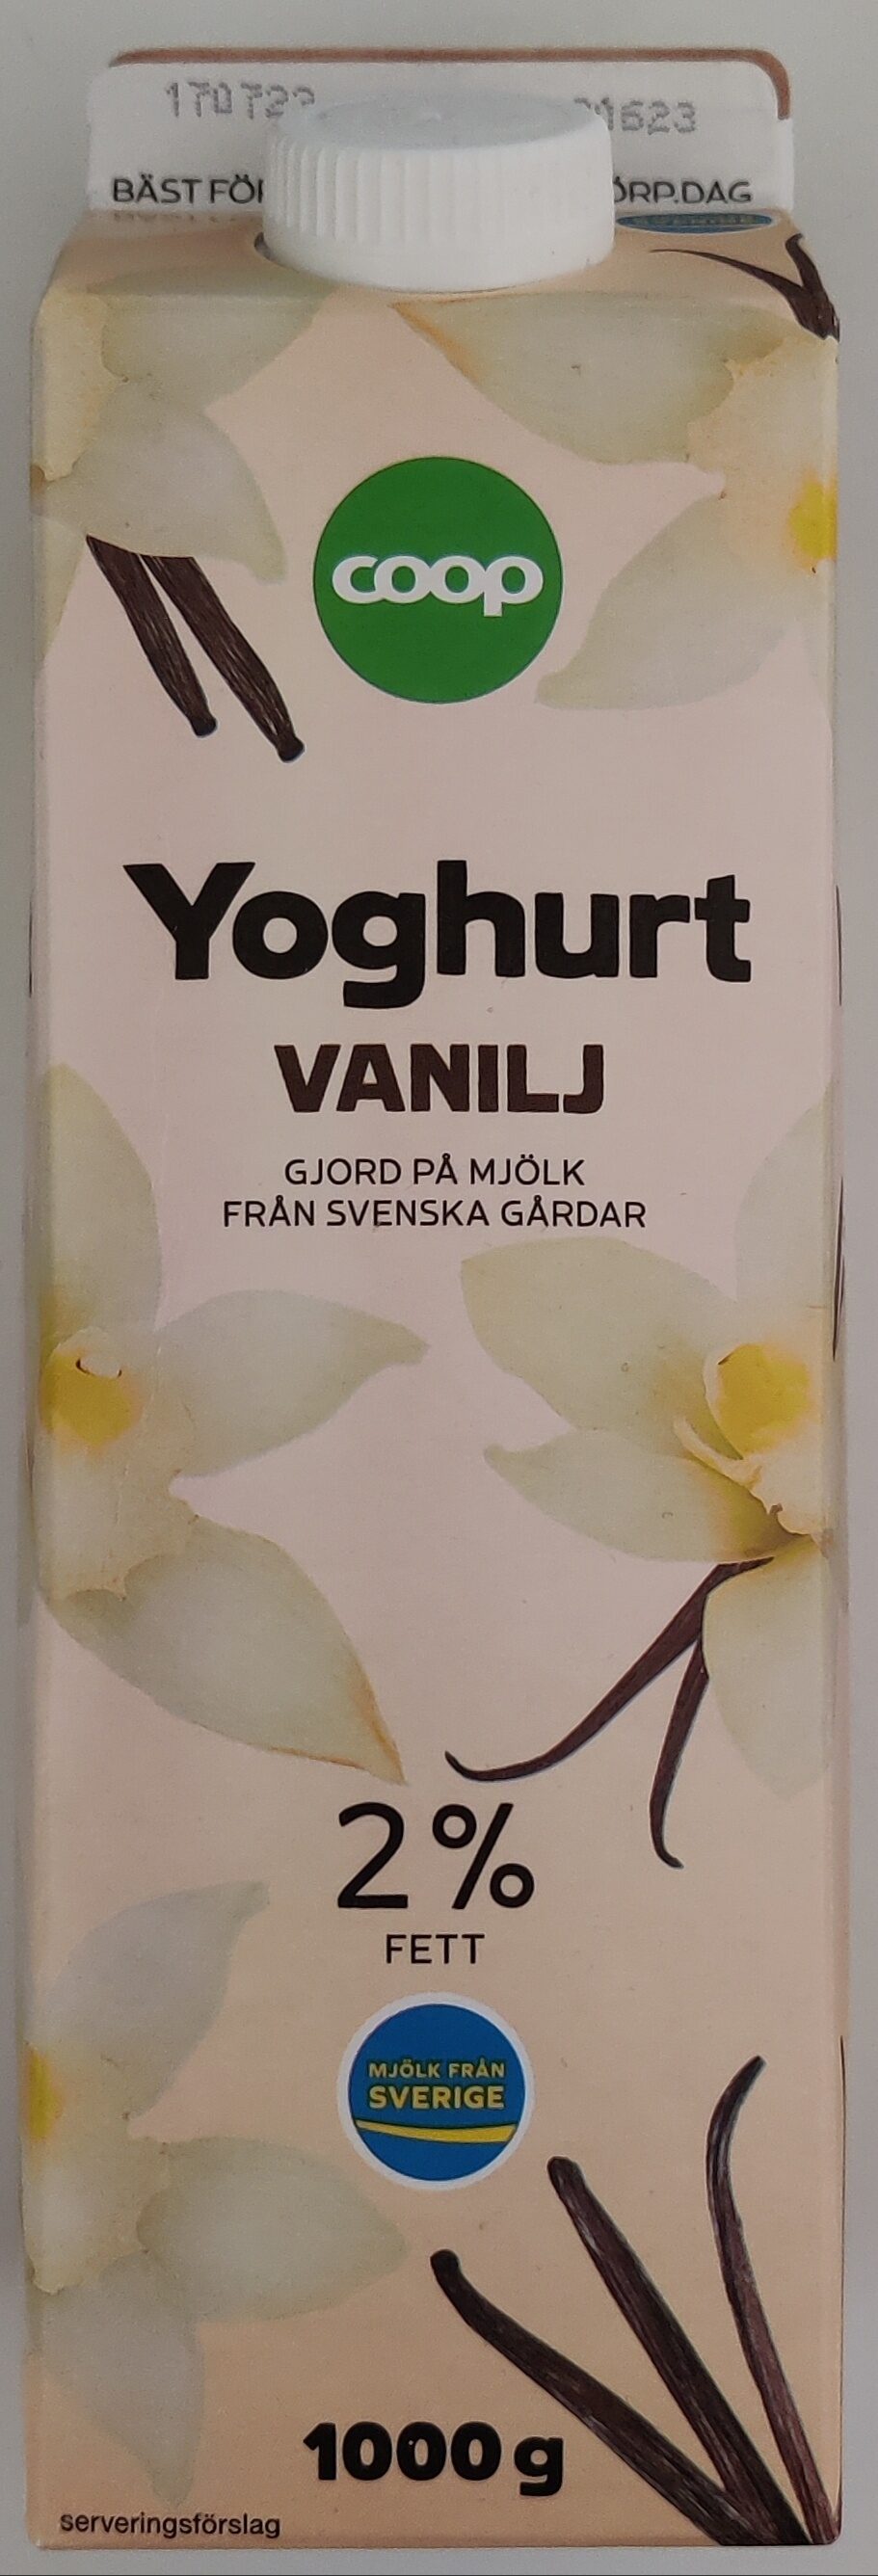 Yoghurt Vanilj - Produkt